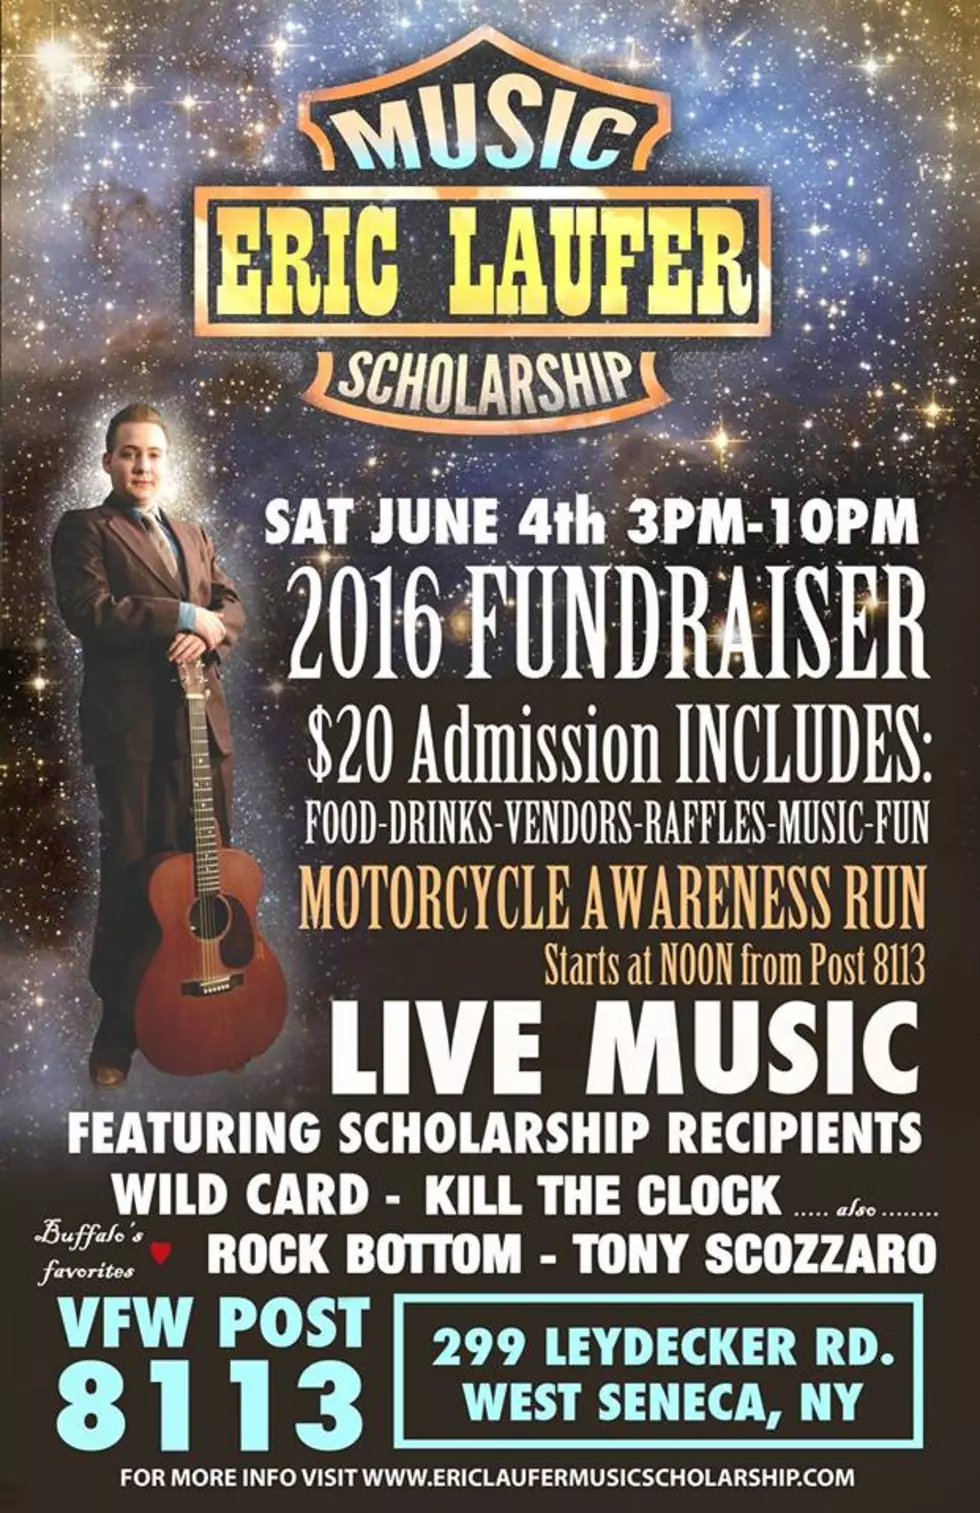 8th Annual Eric Laufer Music Scholarship Fundraiser Coming to West Seneca